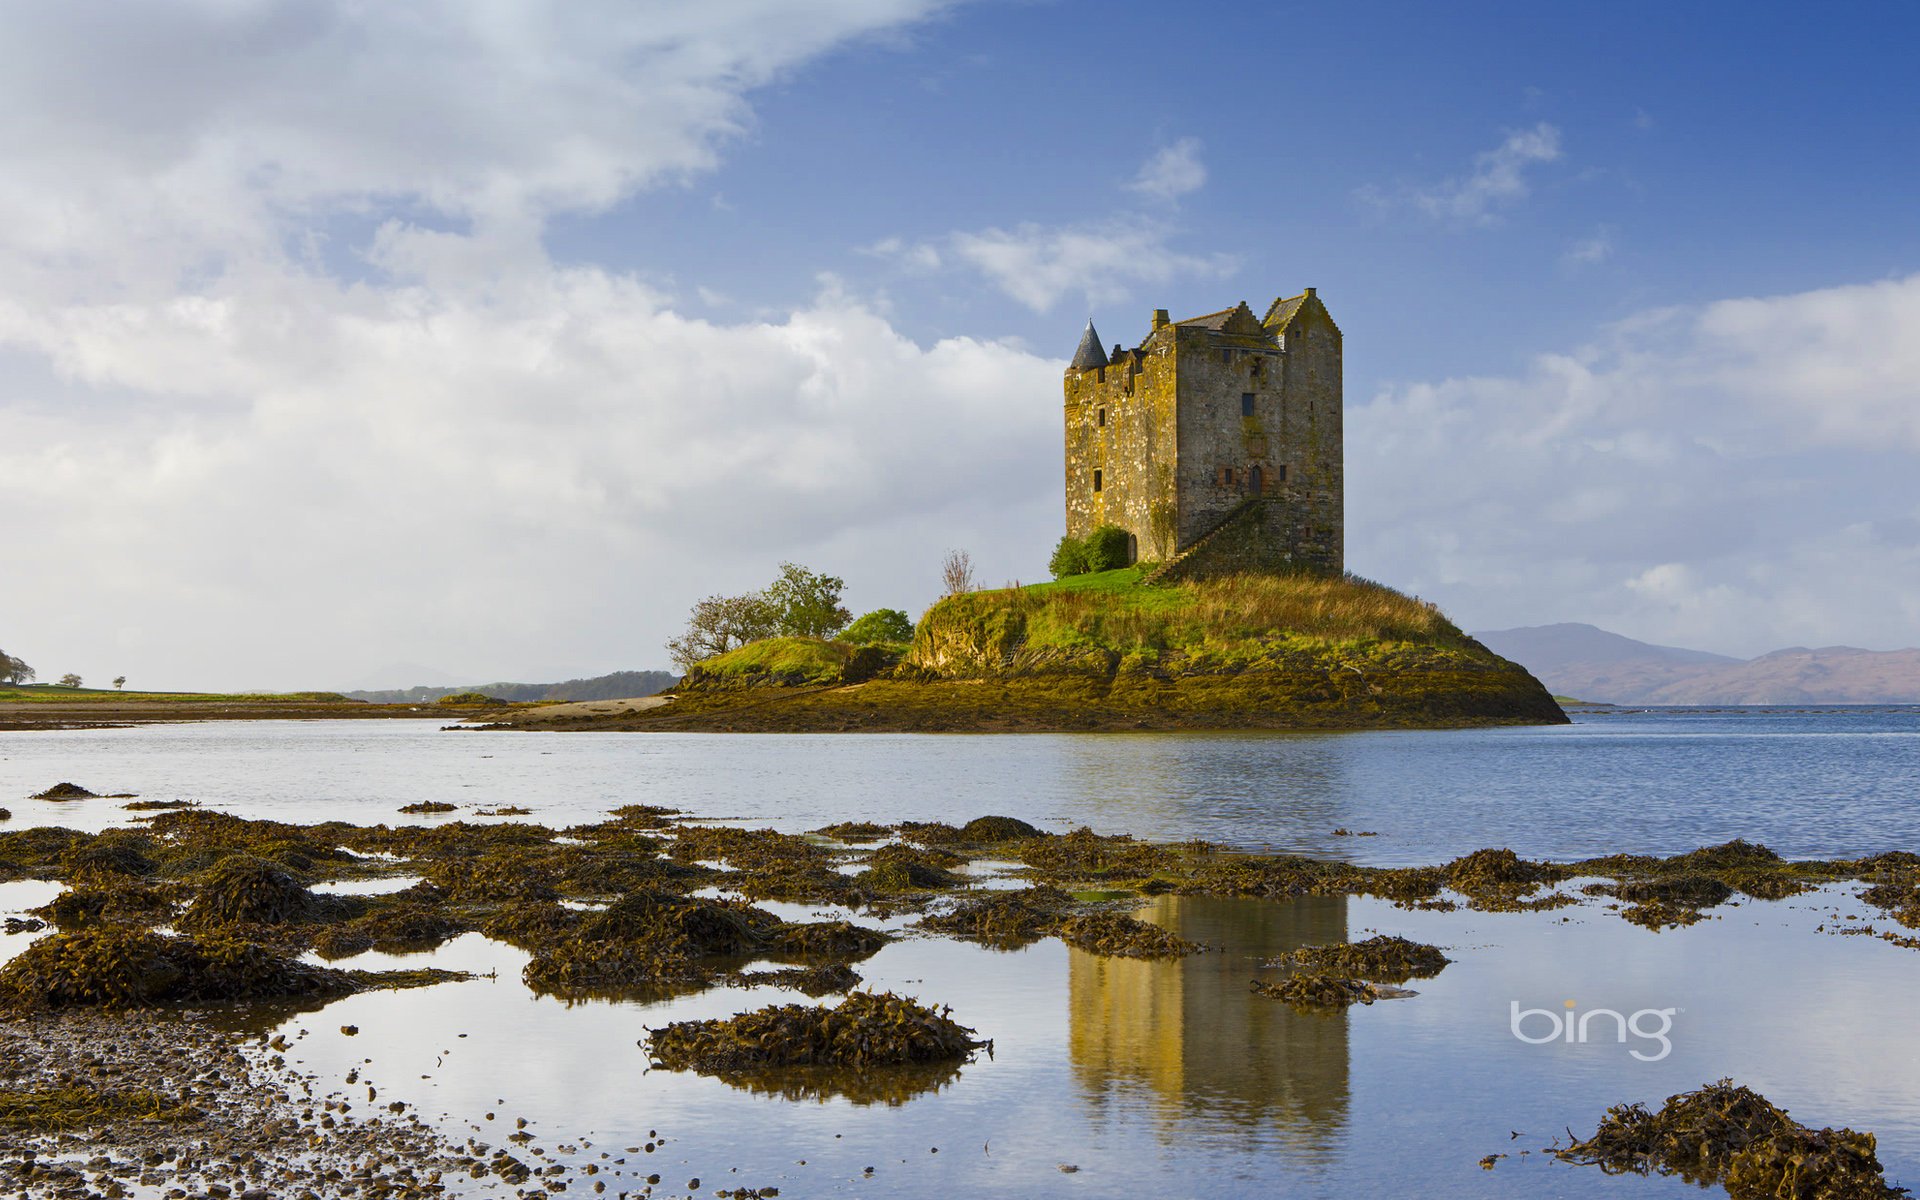  Castle Stalker On An Island In Loch Linnhe Scottish Highlands Scotland